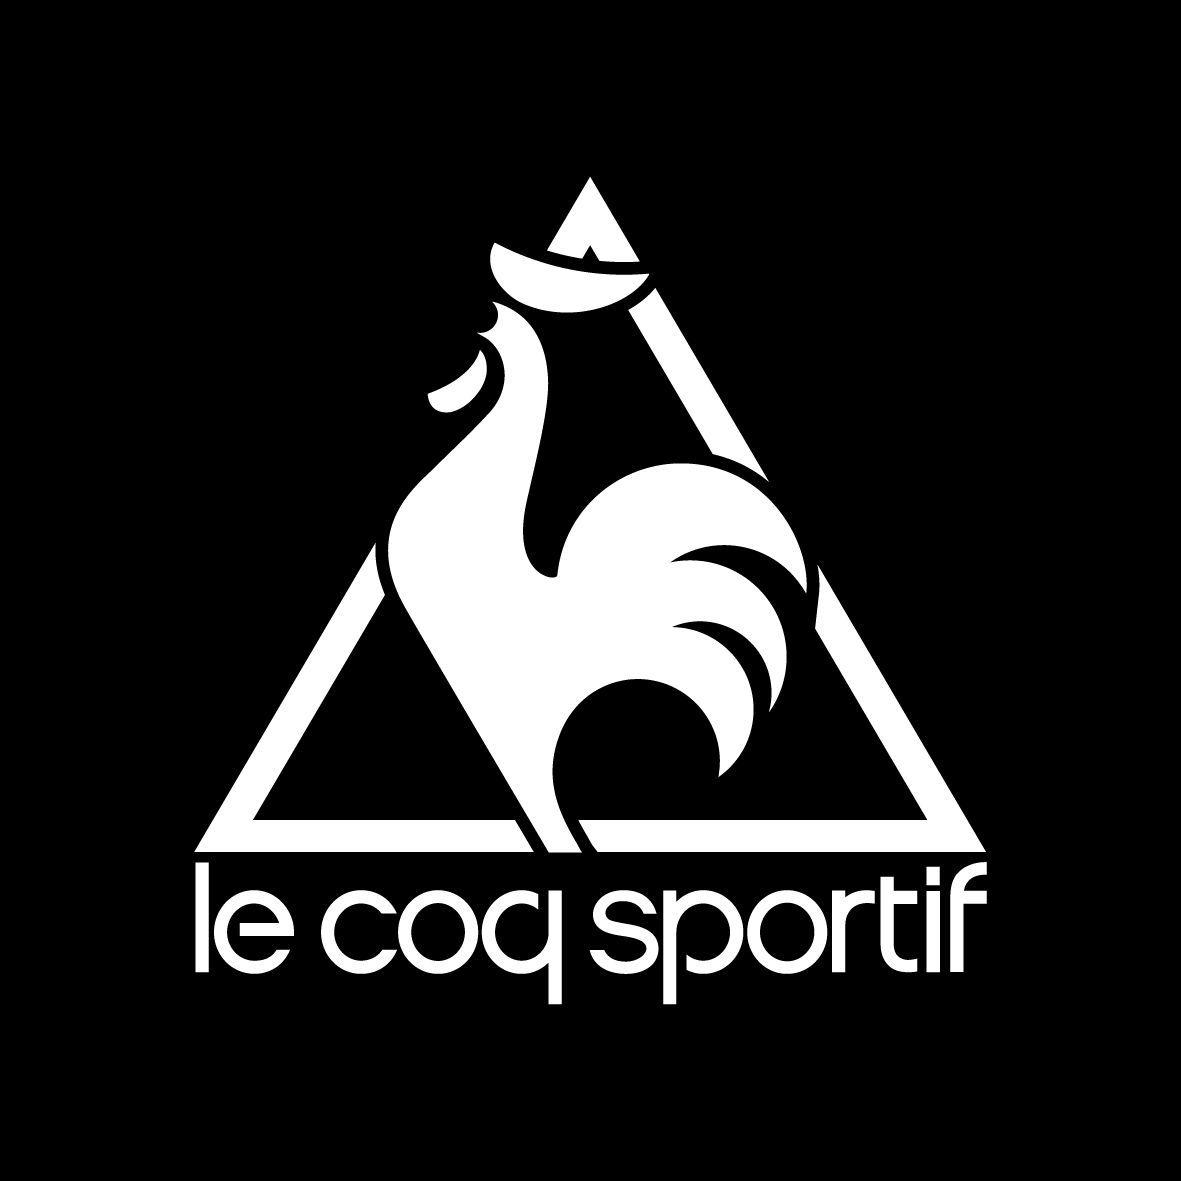 Le Coq Sportif Logo - Le Coq Sportif. Logos. Logo design, Logos, Bird logos